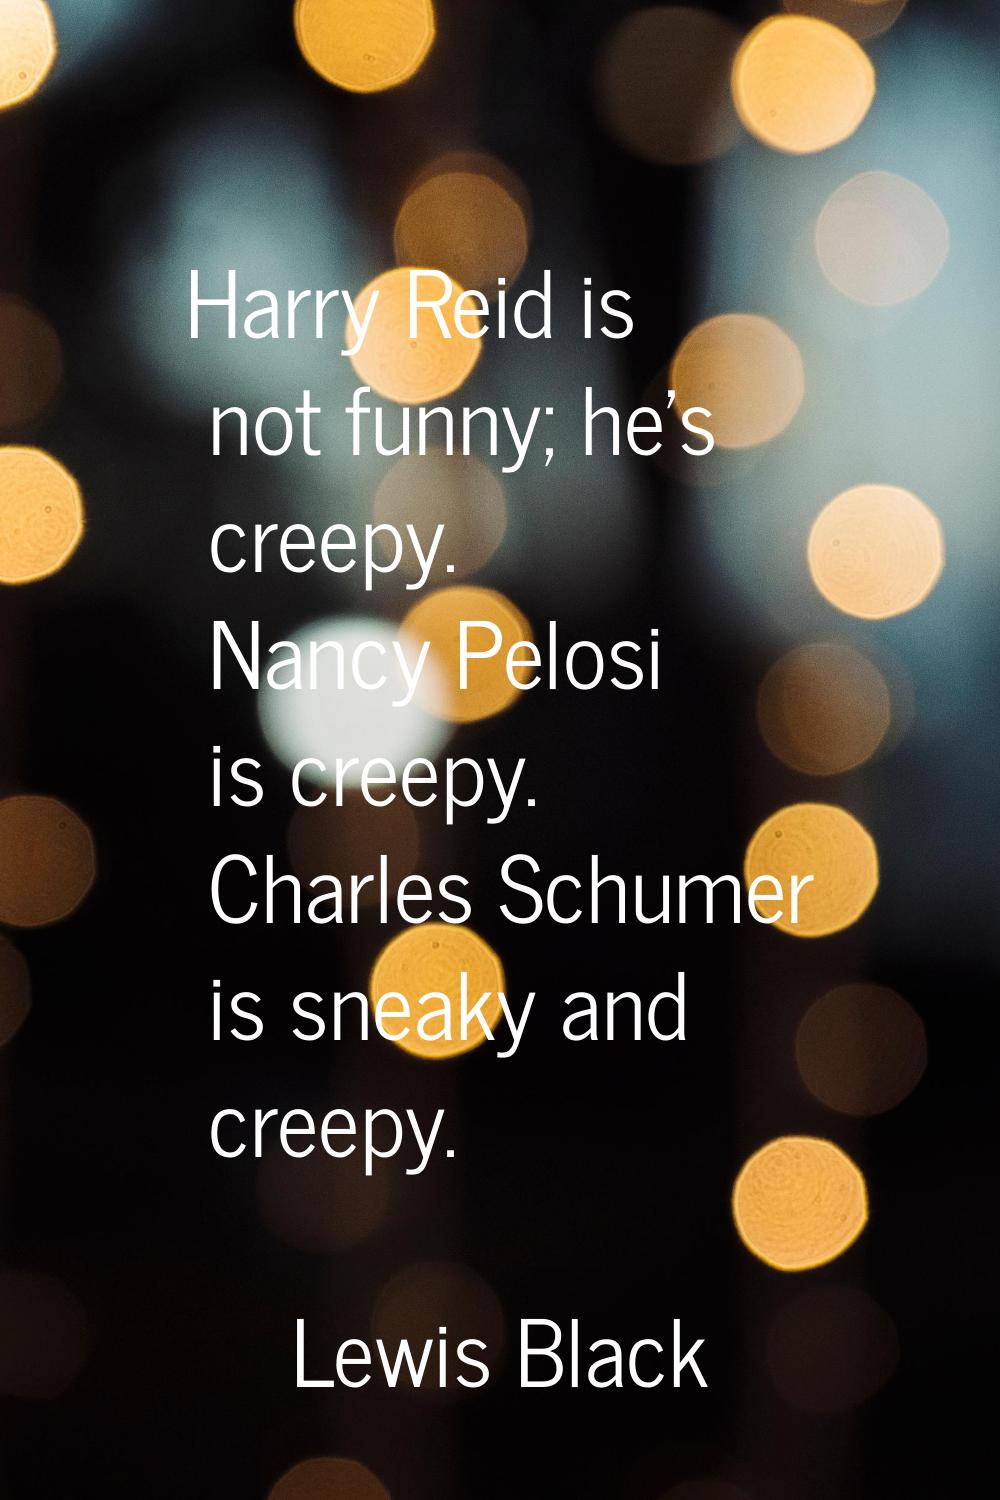 Harry Reid is not funny; he's creepy. Nancy Pelosi is creepy. Charles Schumer is sneaky and creepy.